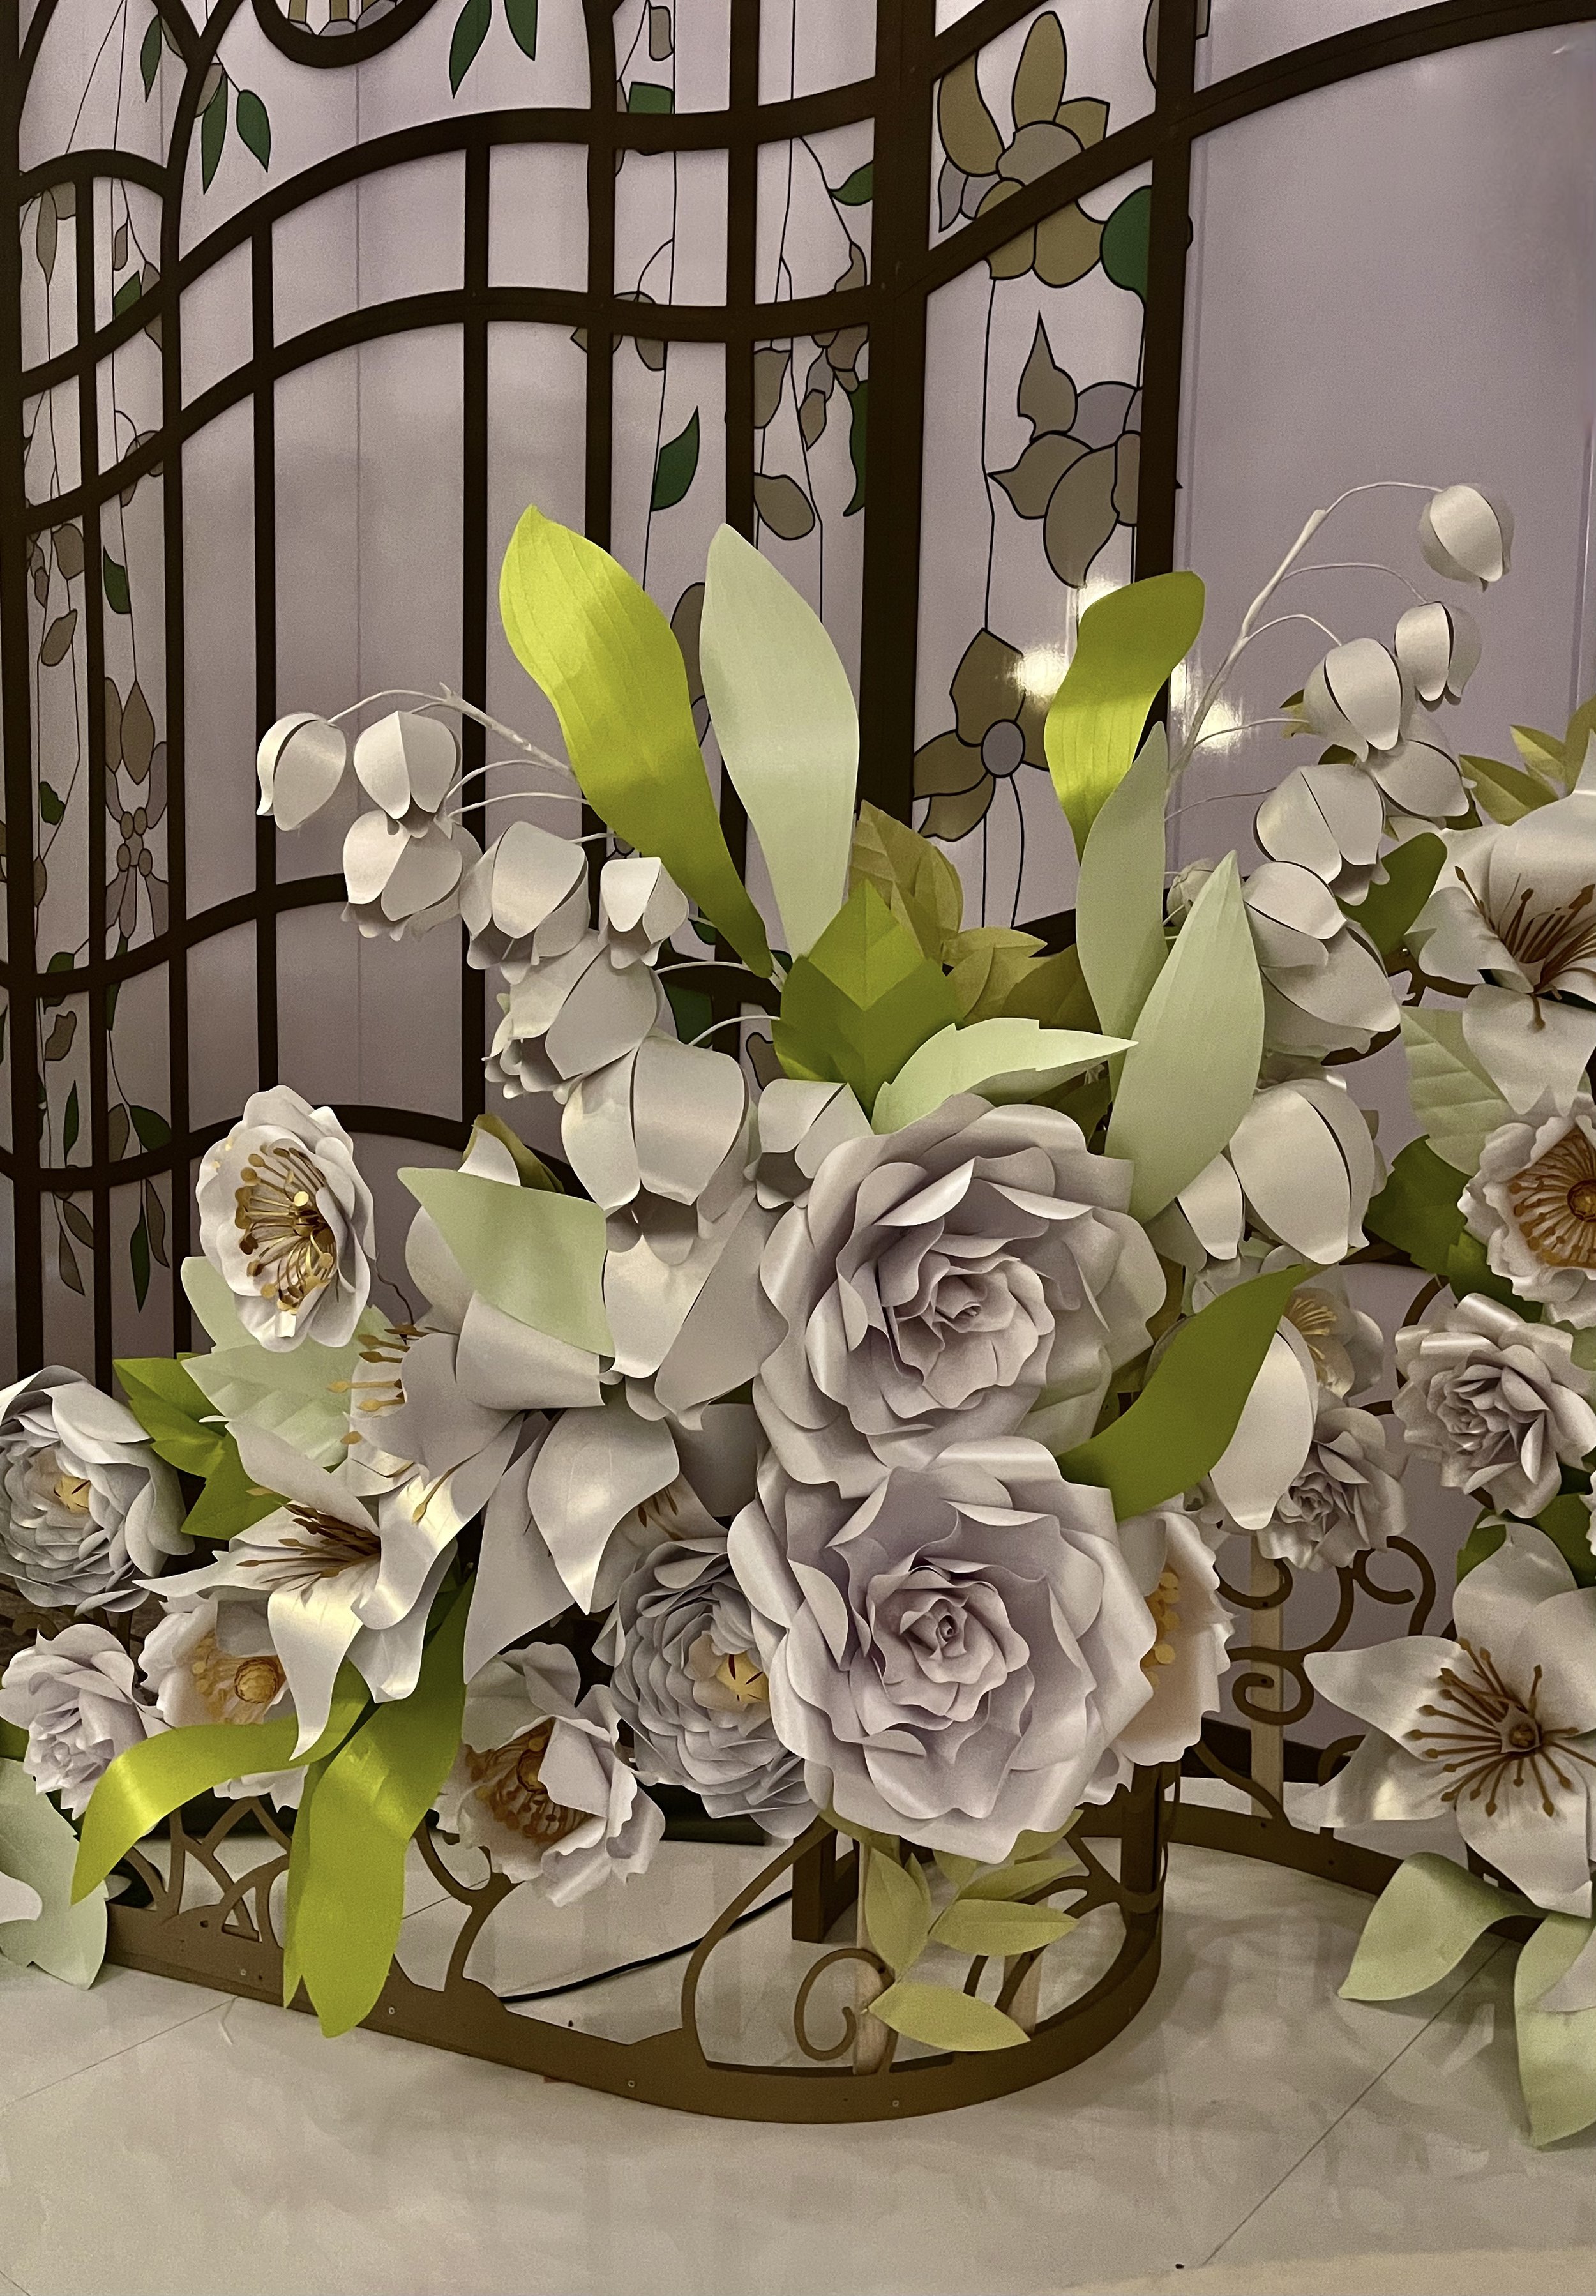 zoe-bradley-paper-wedding-stallation-qatar-doha-flowers-spring-4.jpeg